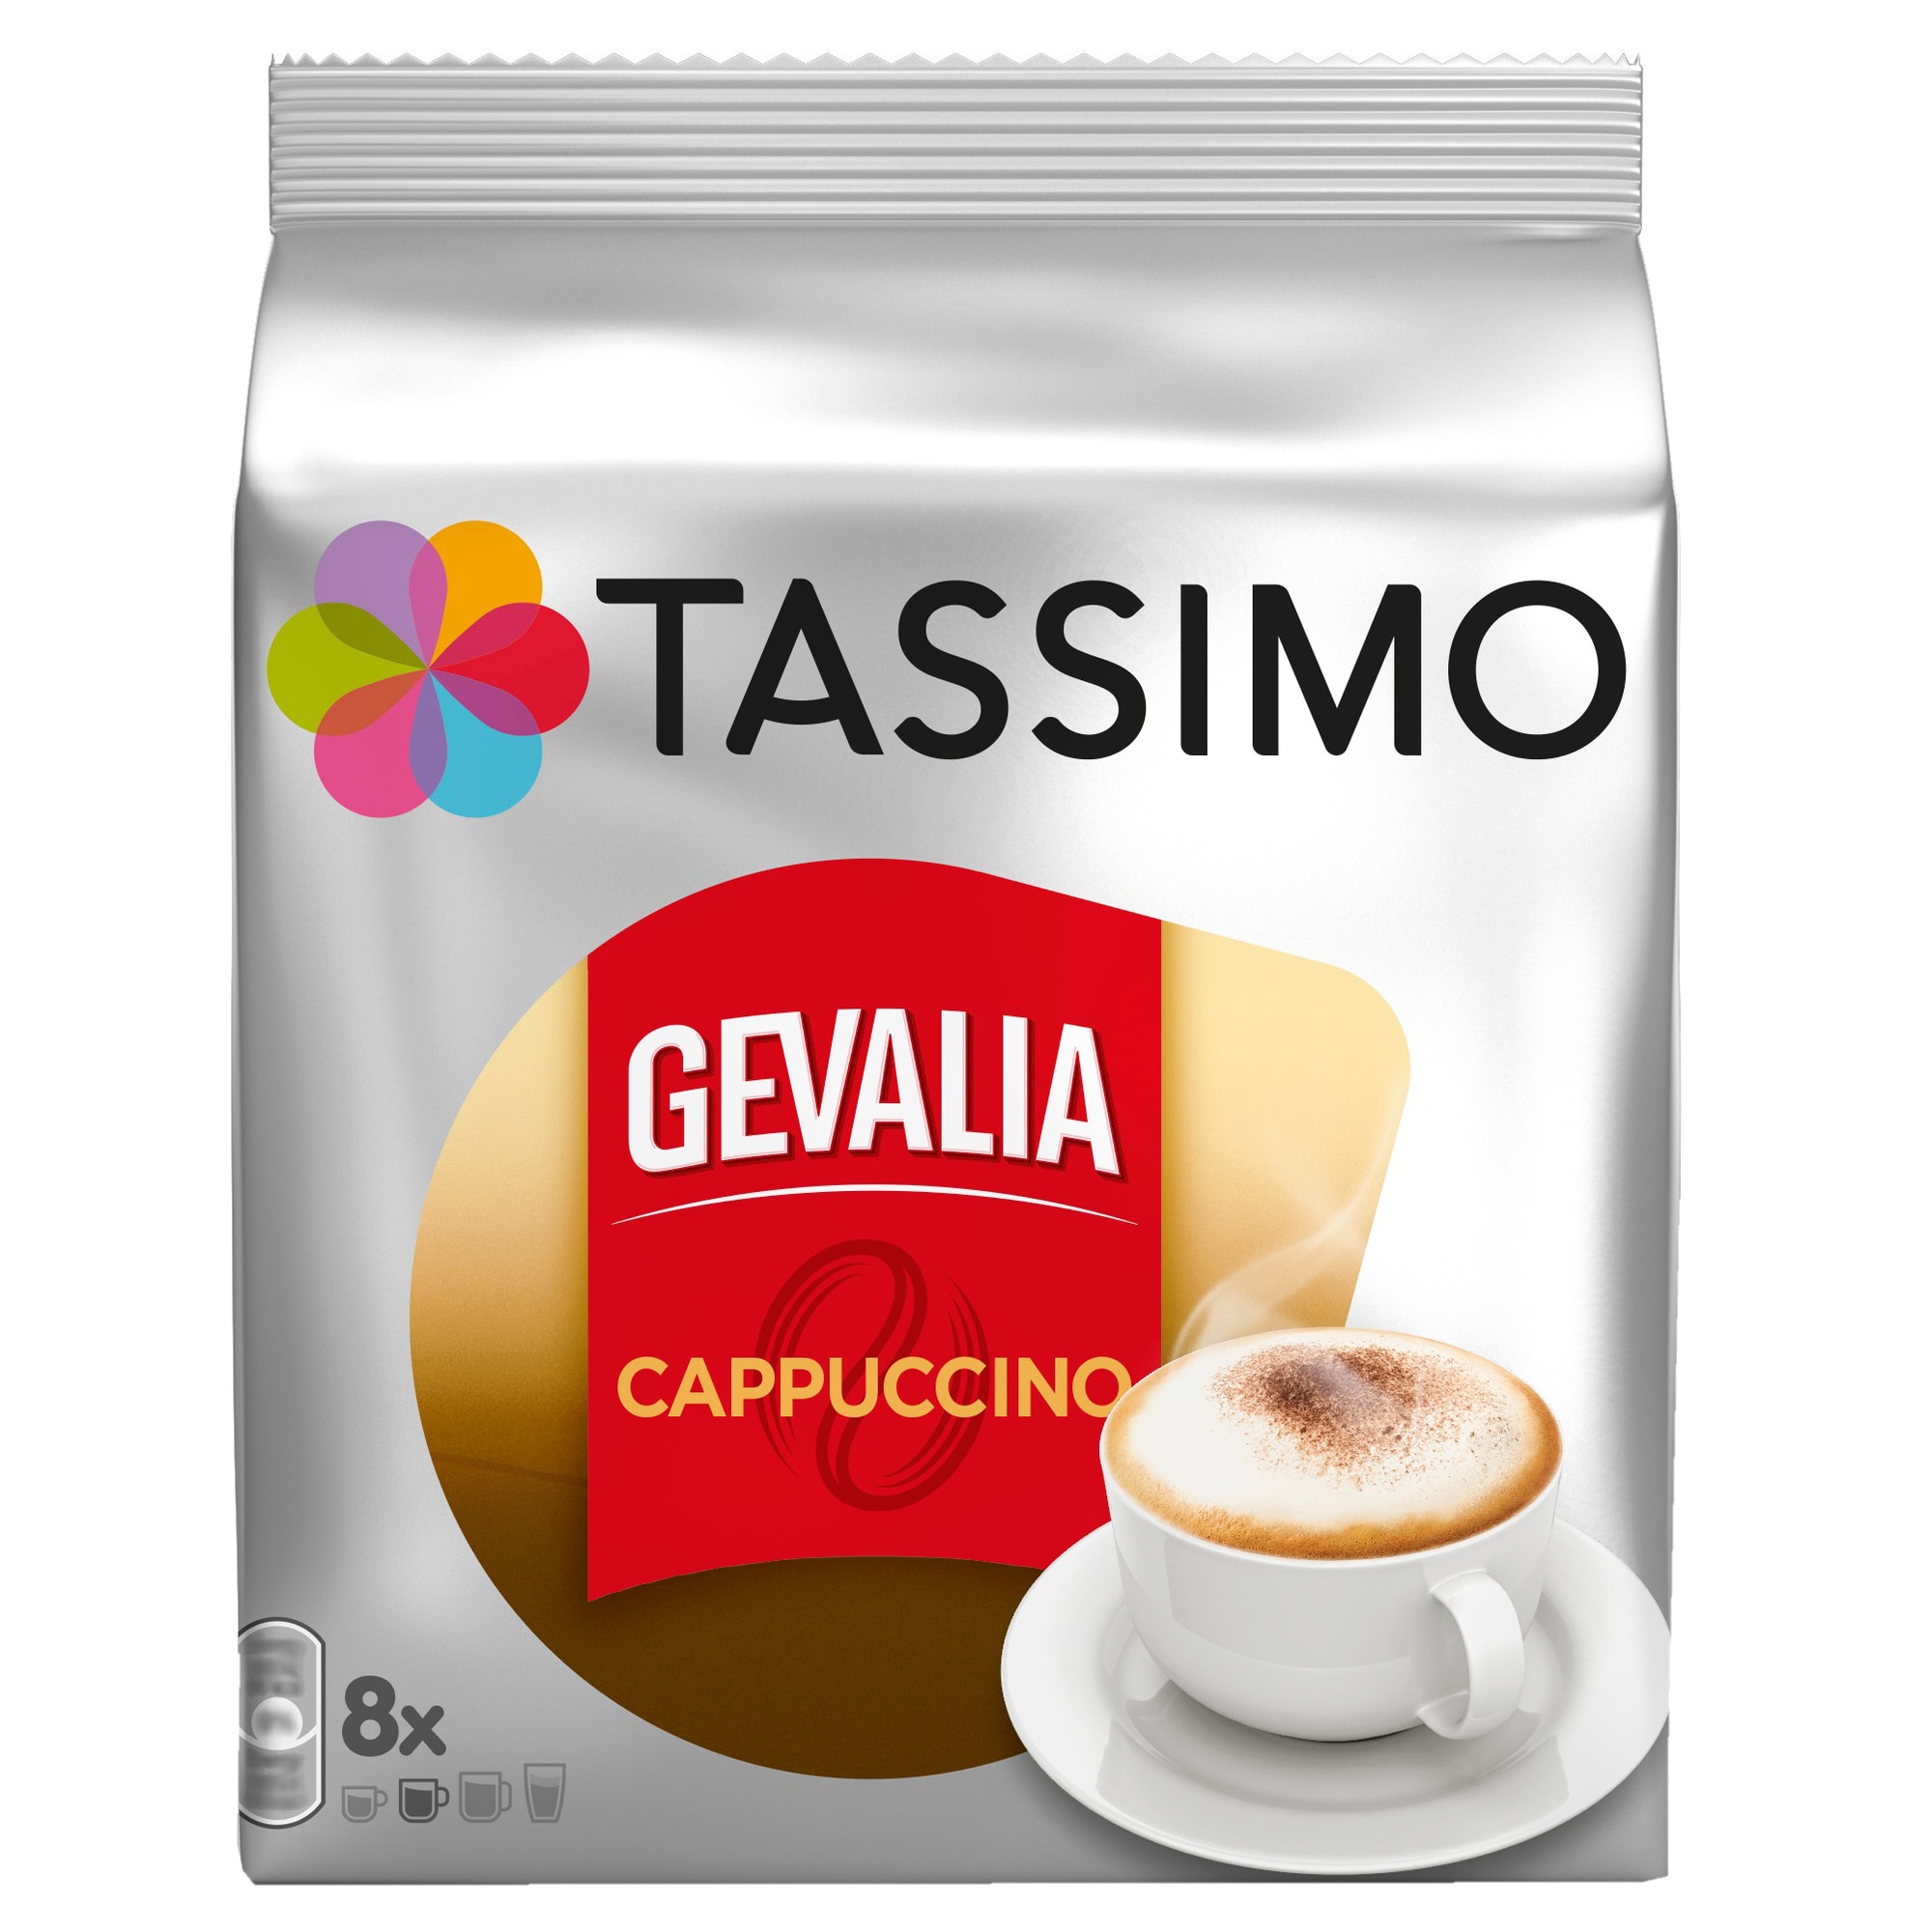 Tassimo Gevalia Cappuccino kapsler - Elkjøp